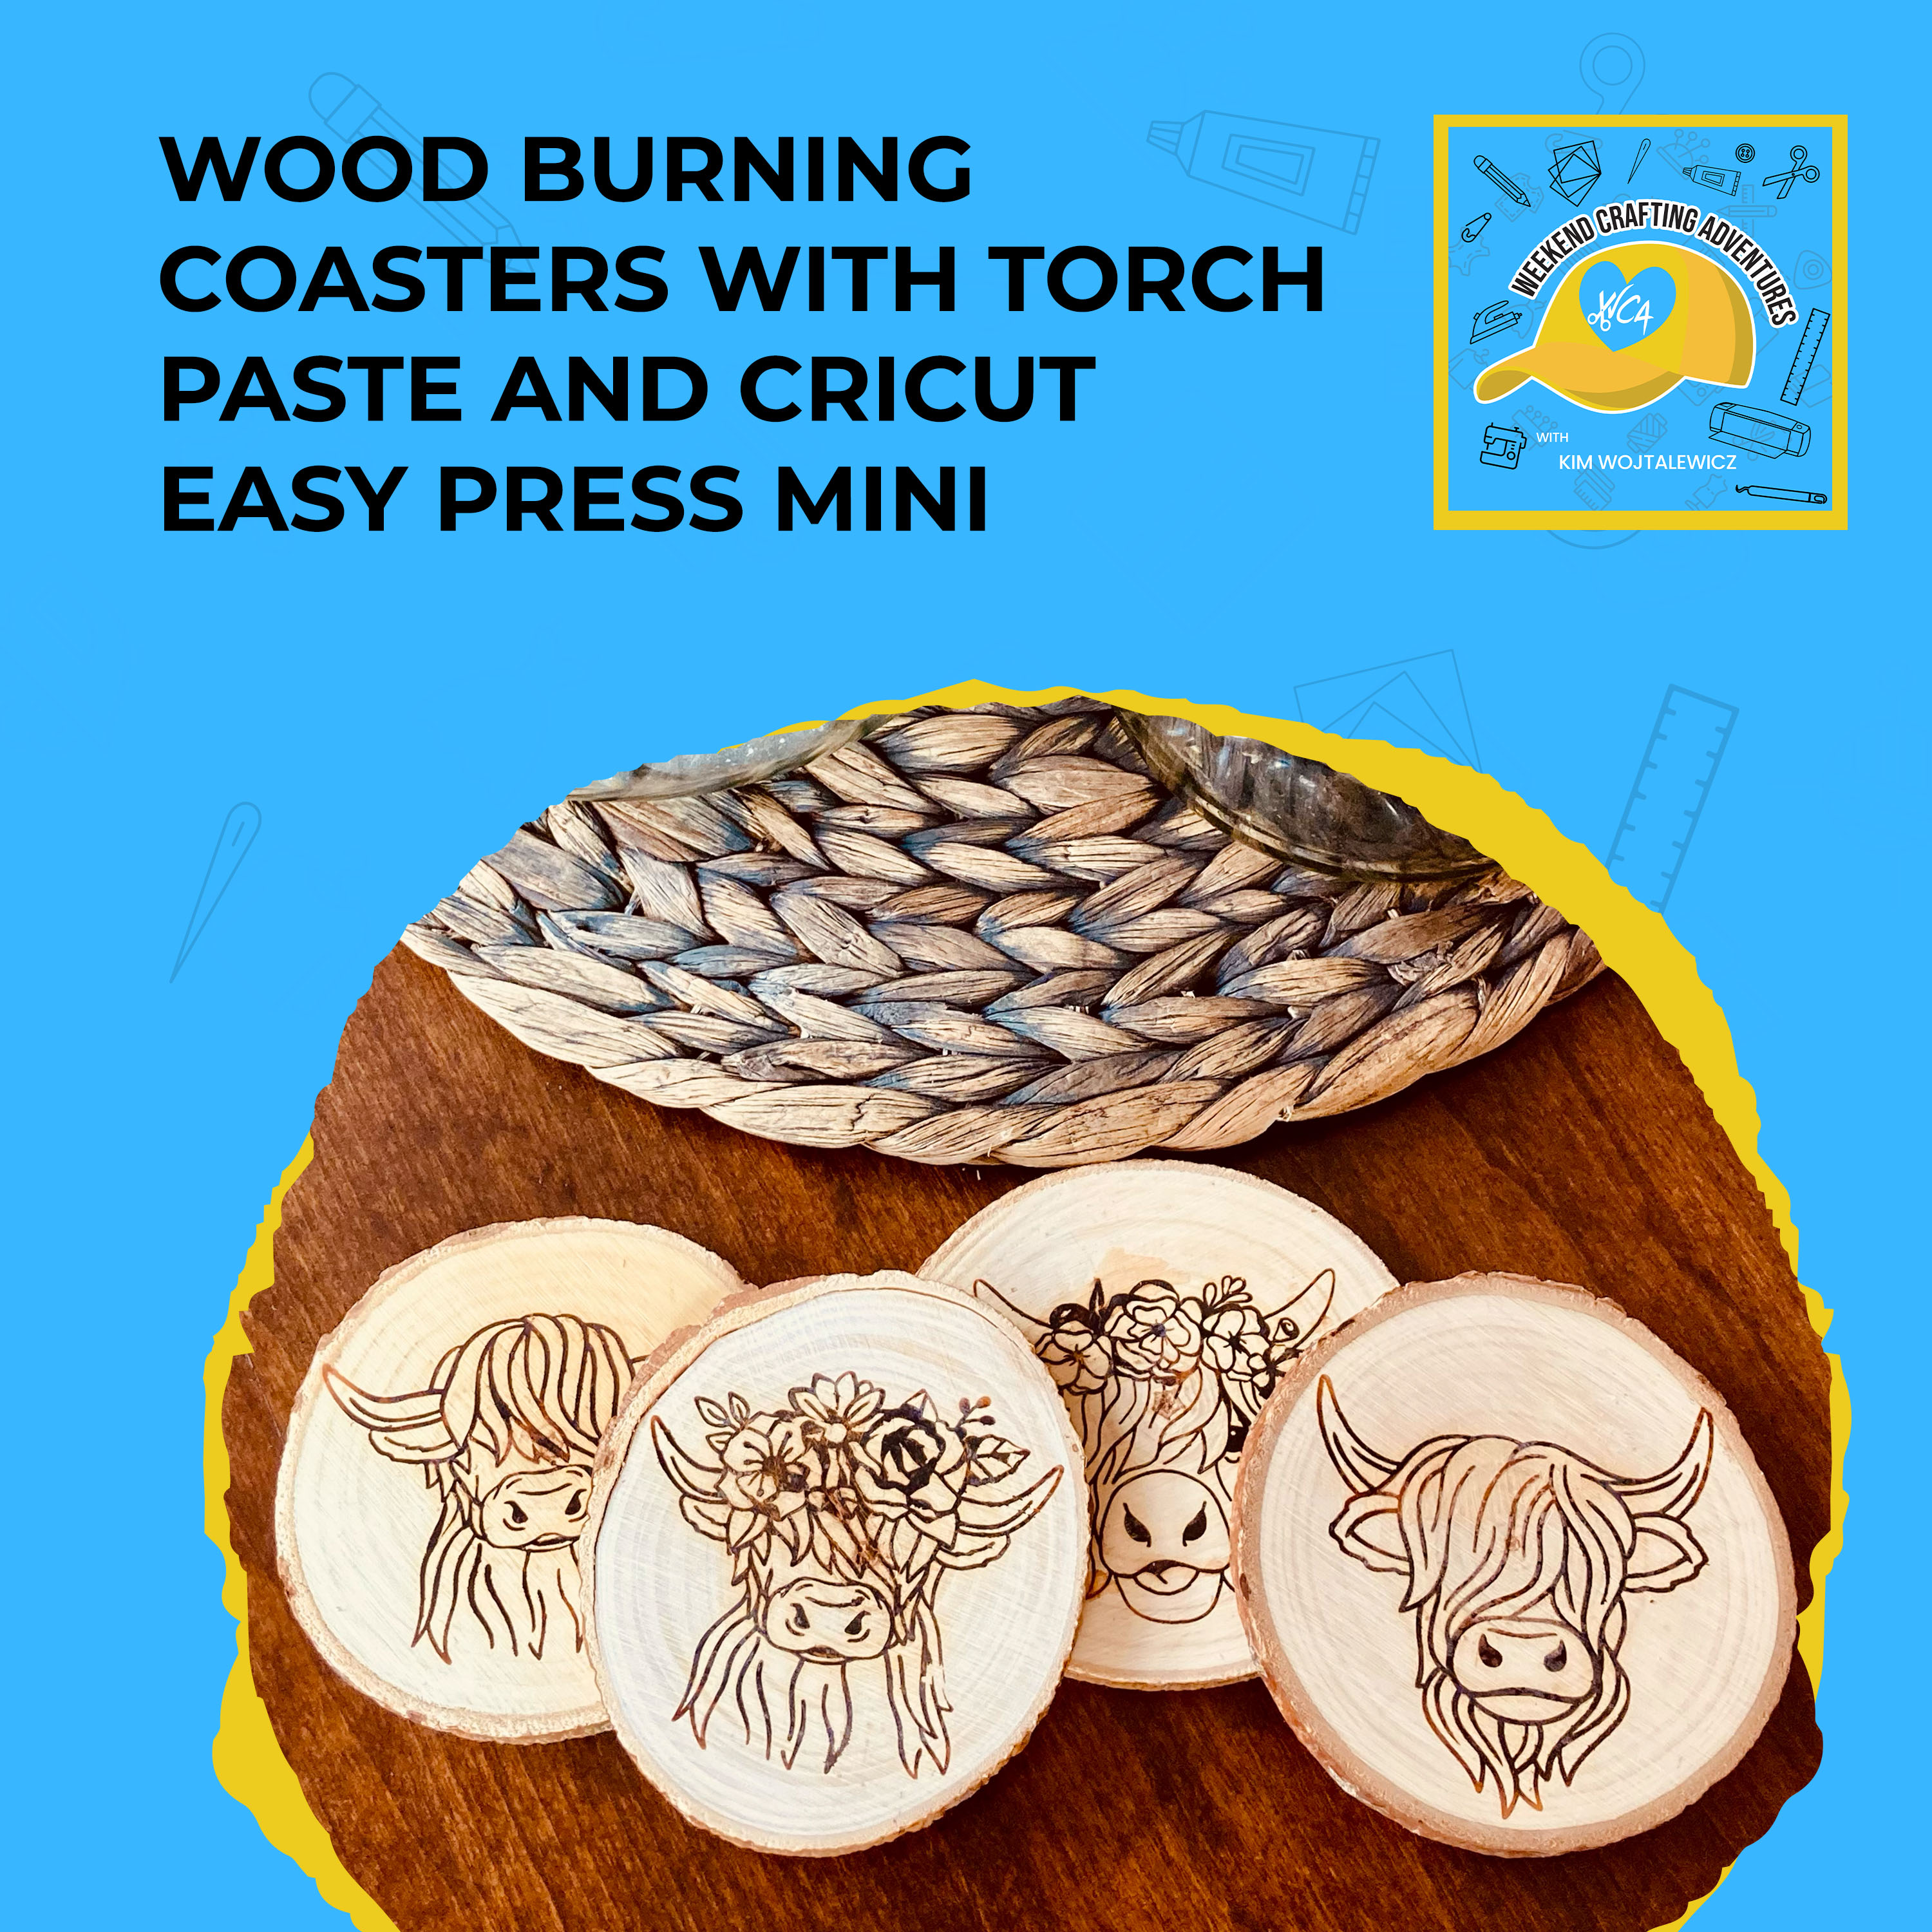 Torch Paste the Original Wood Burning Paste